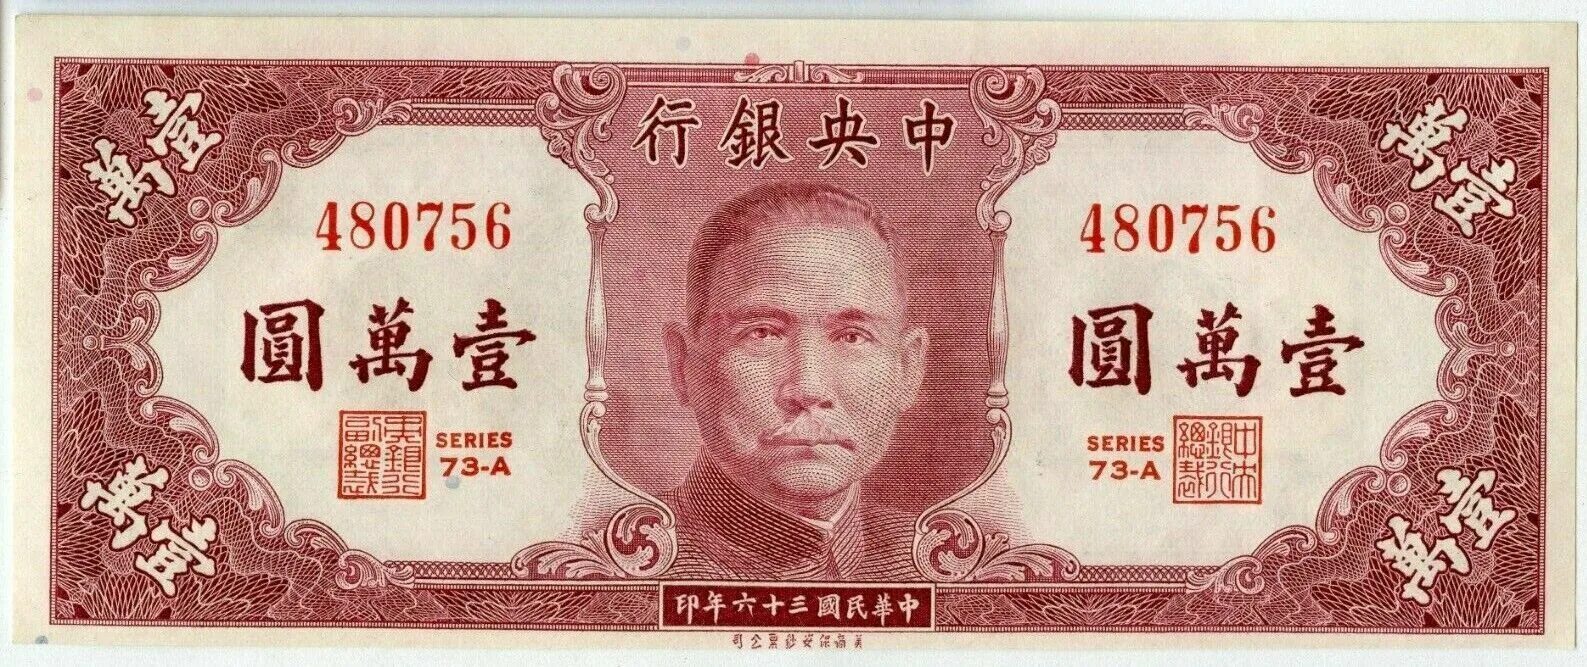 200 000 юаней. 10 000 Юаней банкнота. 10000 Юань банкнота 1948. Купюра Китай 1947. Китайская банкнота 10 юаней.